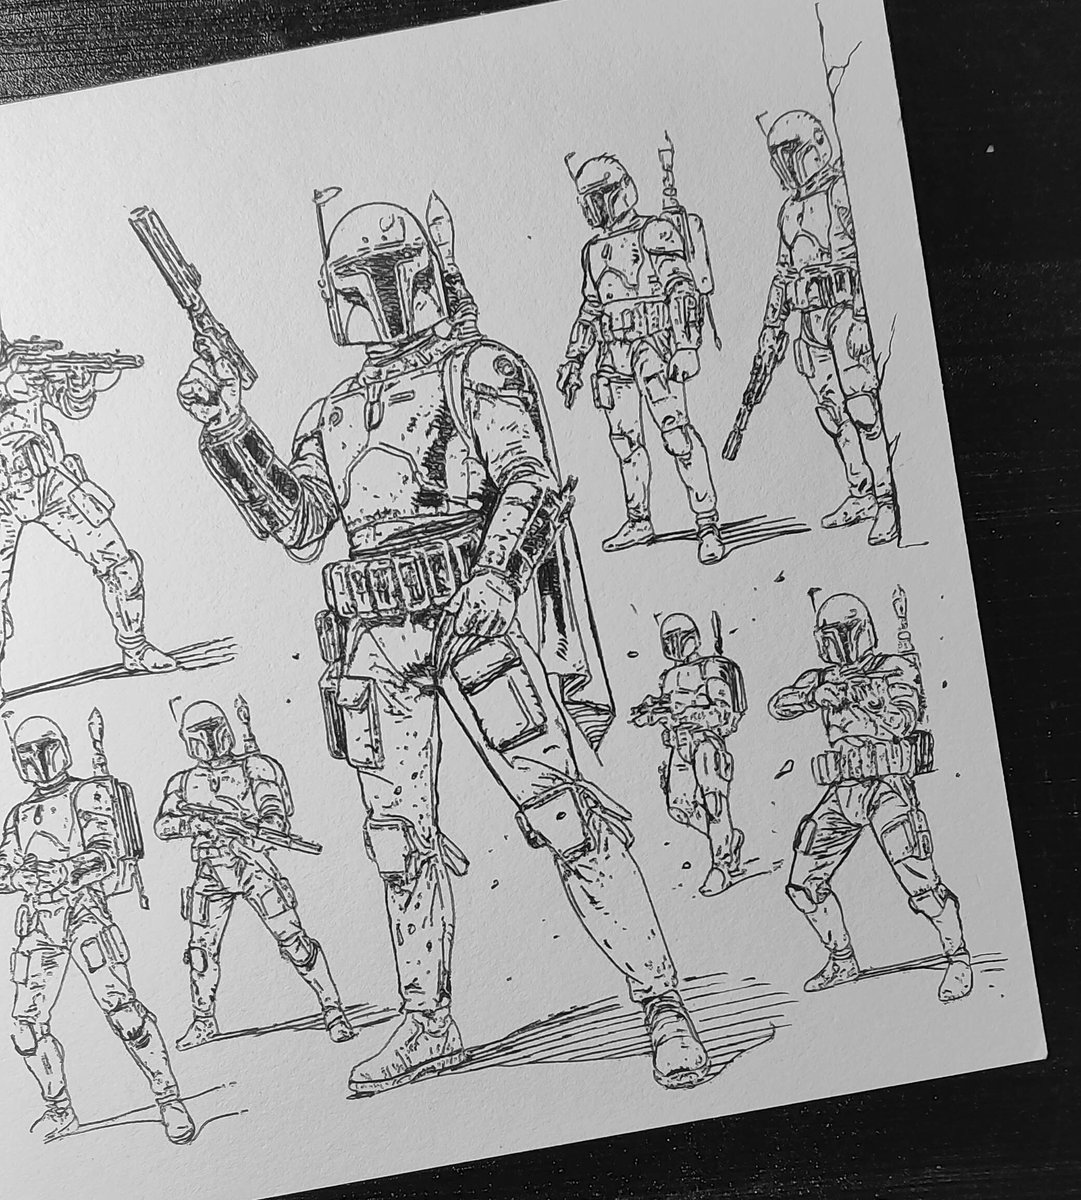 Boba Fett sketches on paper 20x20 cm #StarWars #BobaFettFanClub #DailyFett #artist #ArtistOnTwitter